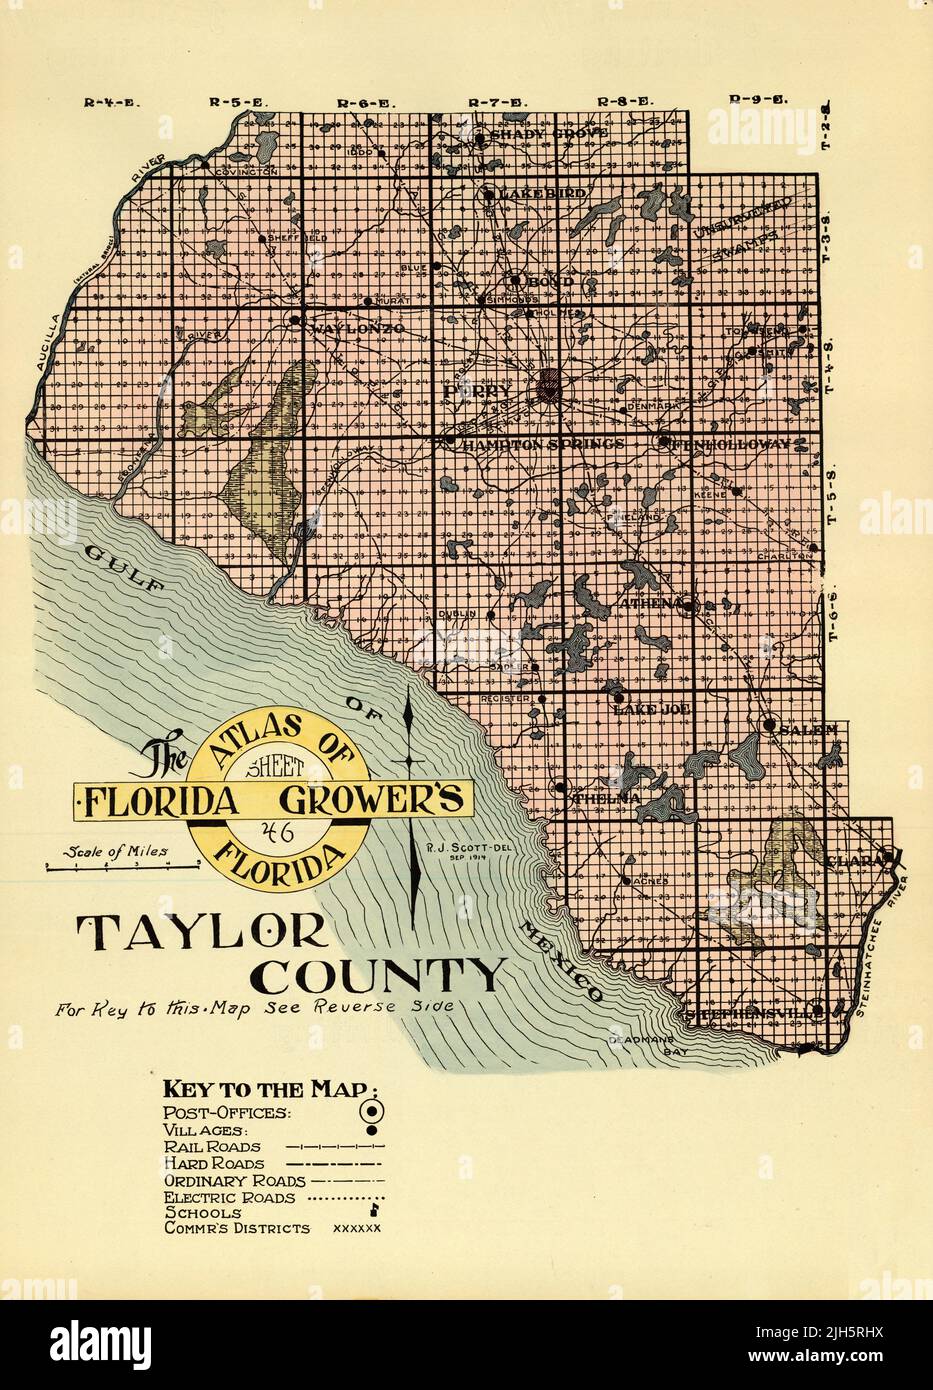 The Florida Growers Atlas of Florida, Map of Taylor County, 1914, von R. J. Scott Stockfoto